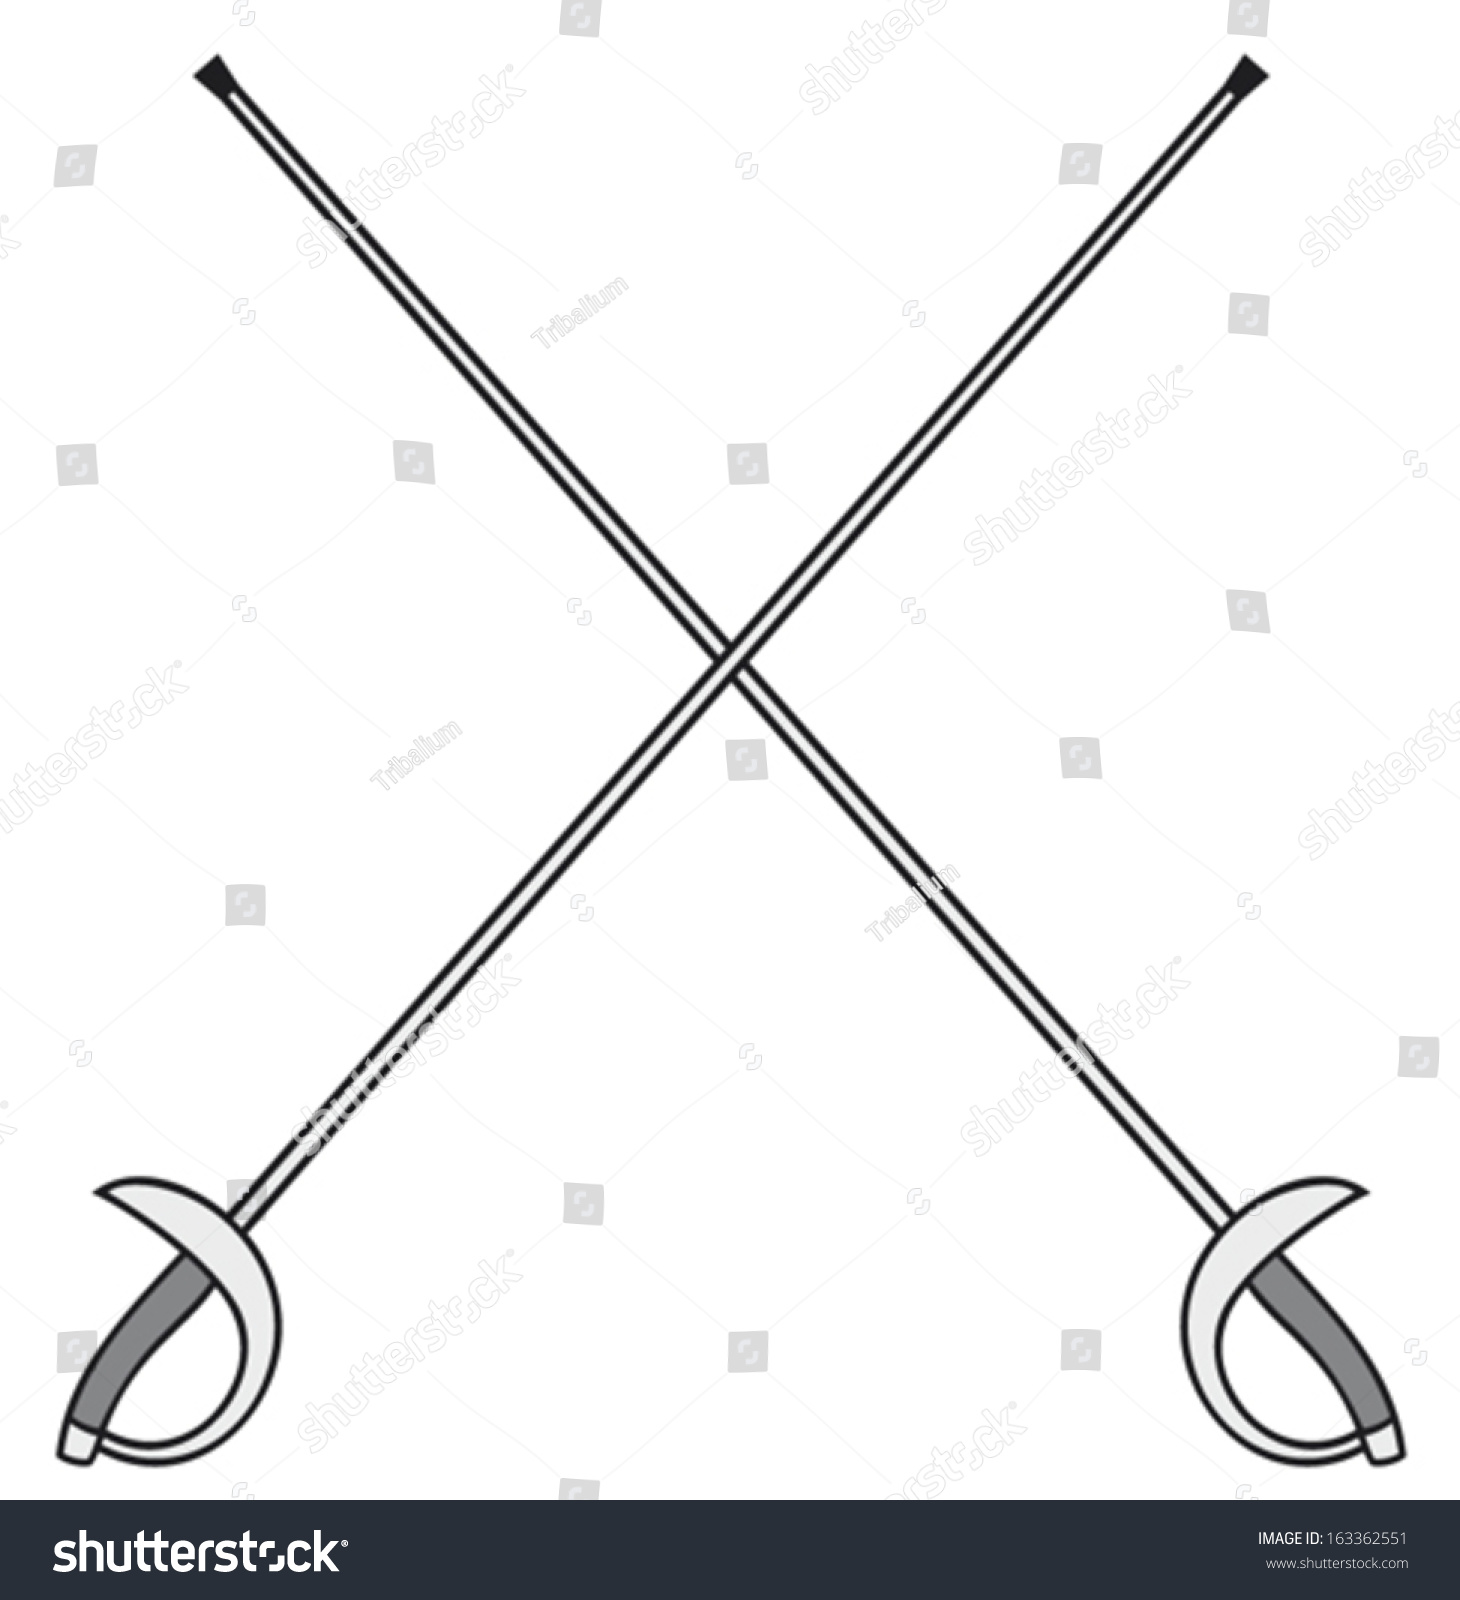 Crossed Fencing Swords Stock Vector Illustration 163362551 Shutterstock